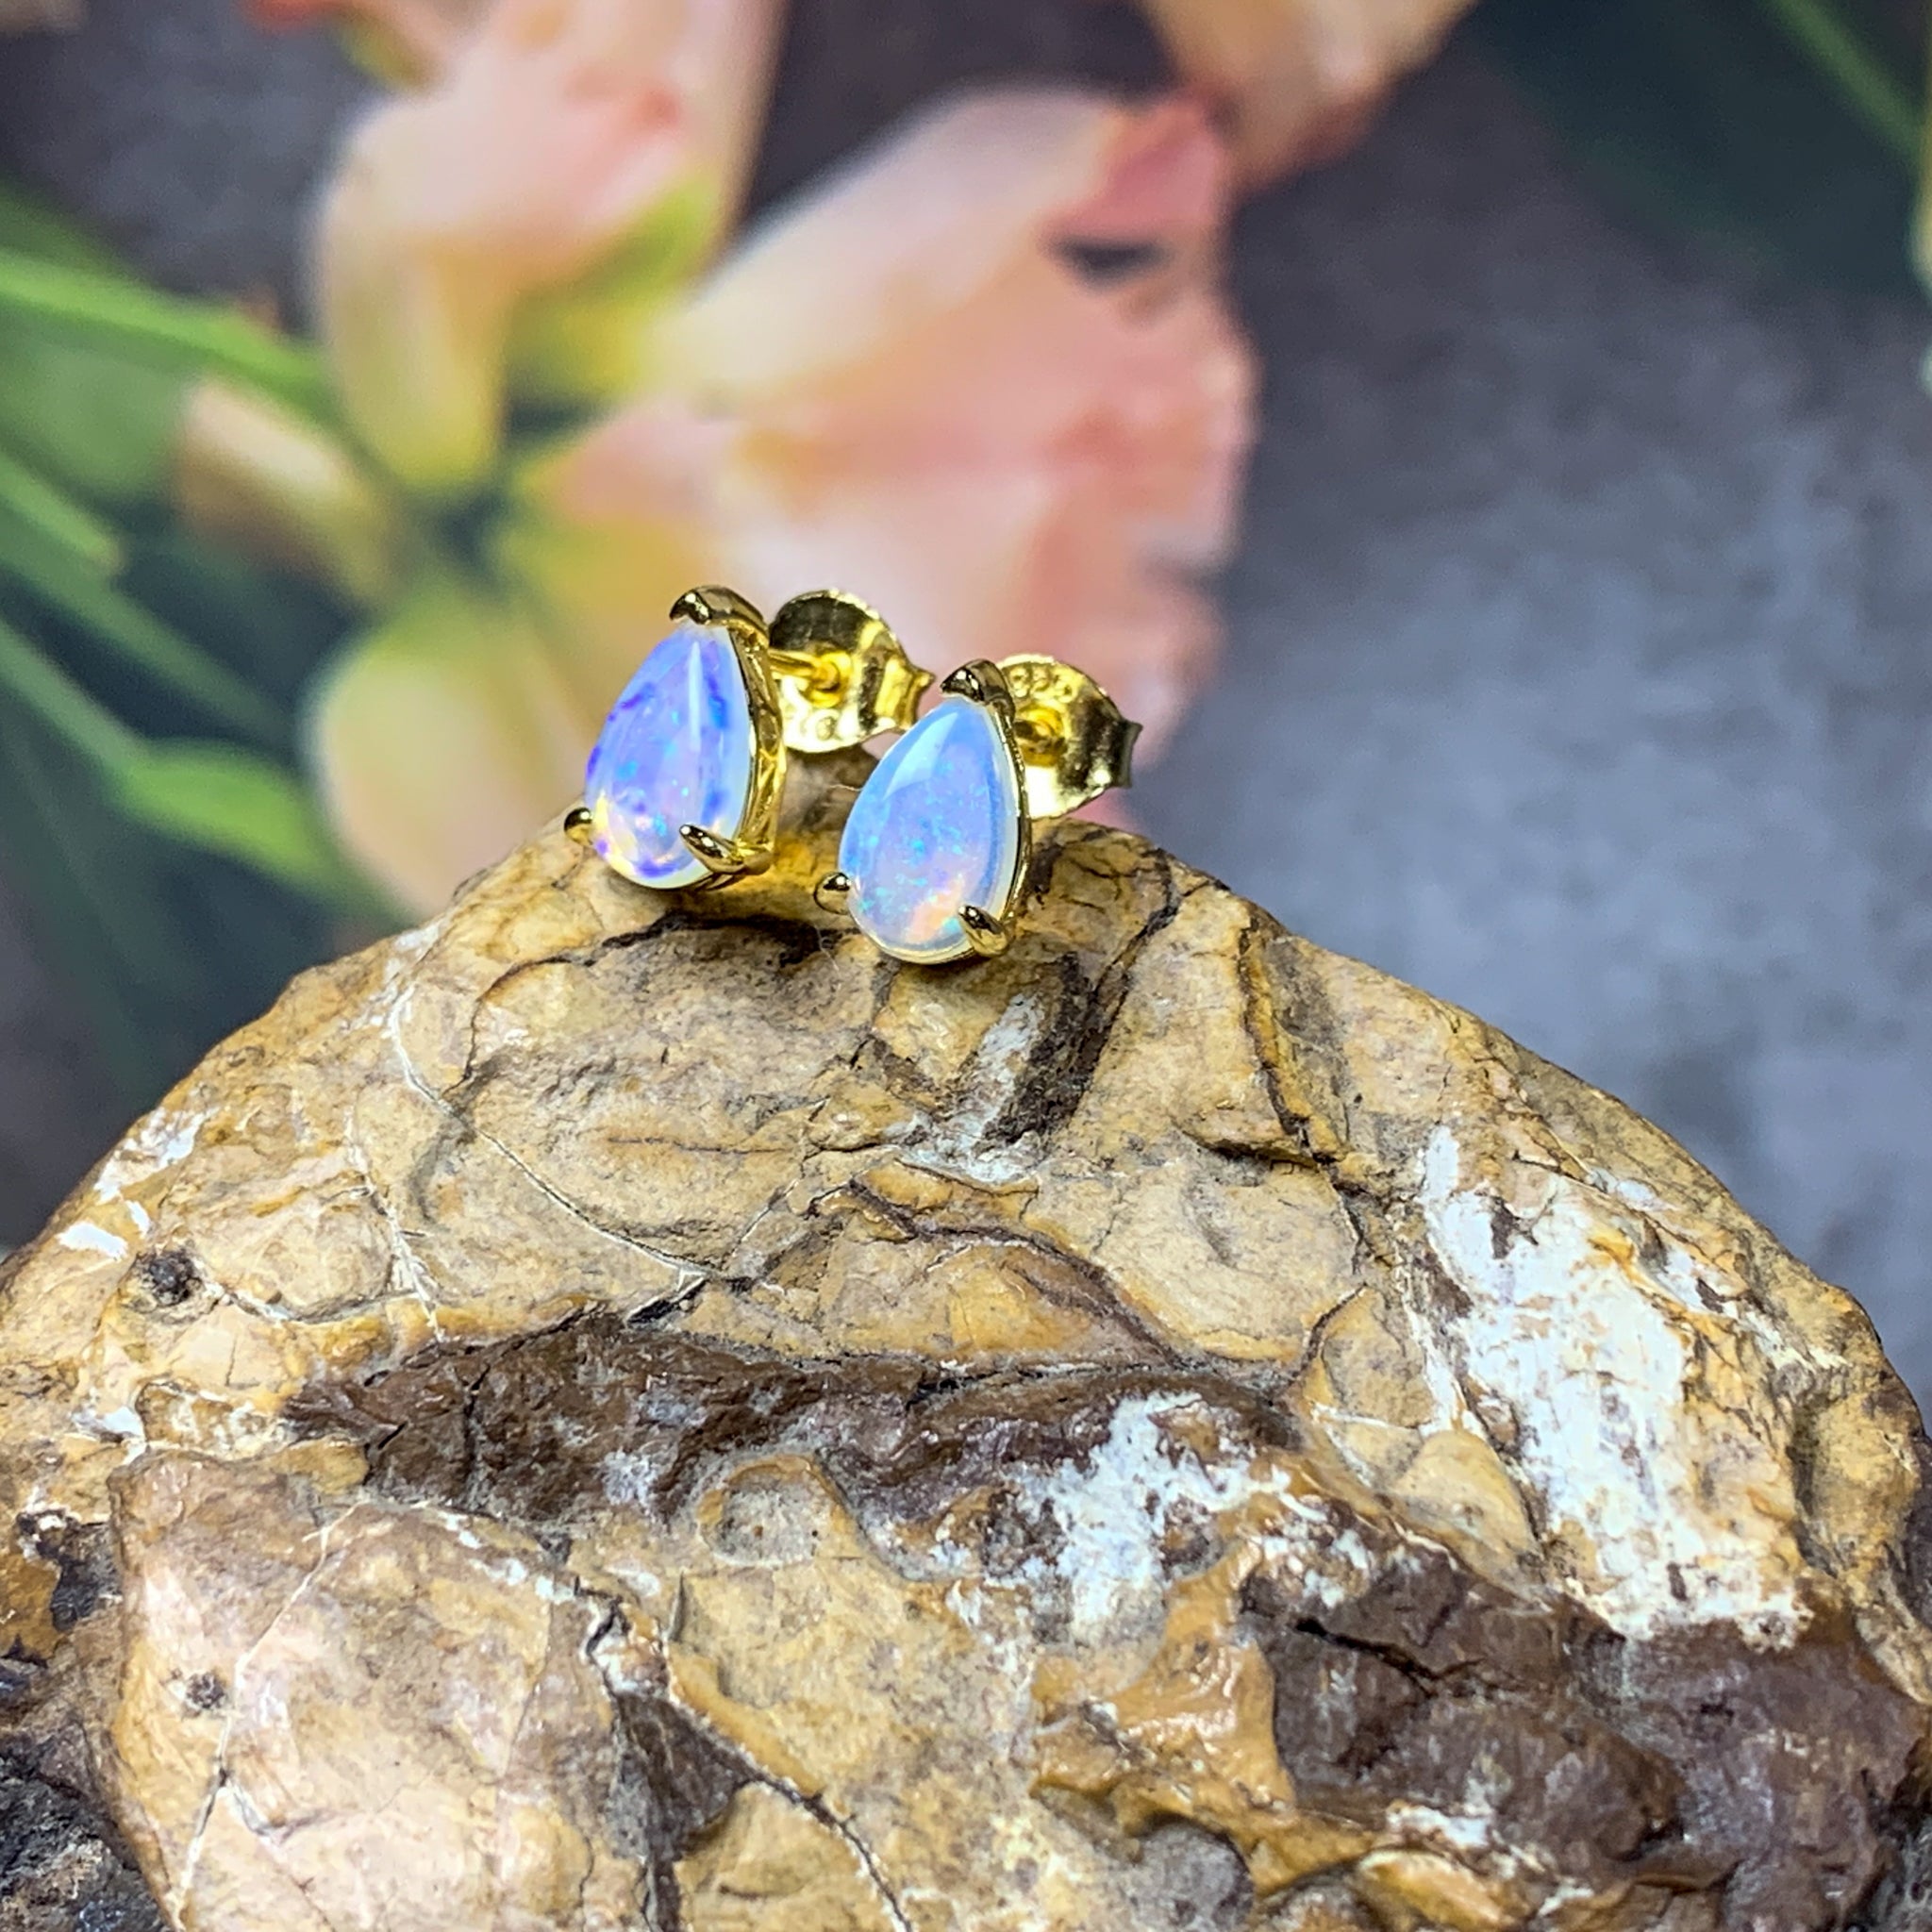 Gold plated silver 8x5mm pearshape White Opal studs - Masterpiece Jewellery Opal & Gems Sydney Australia | Online Shop